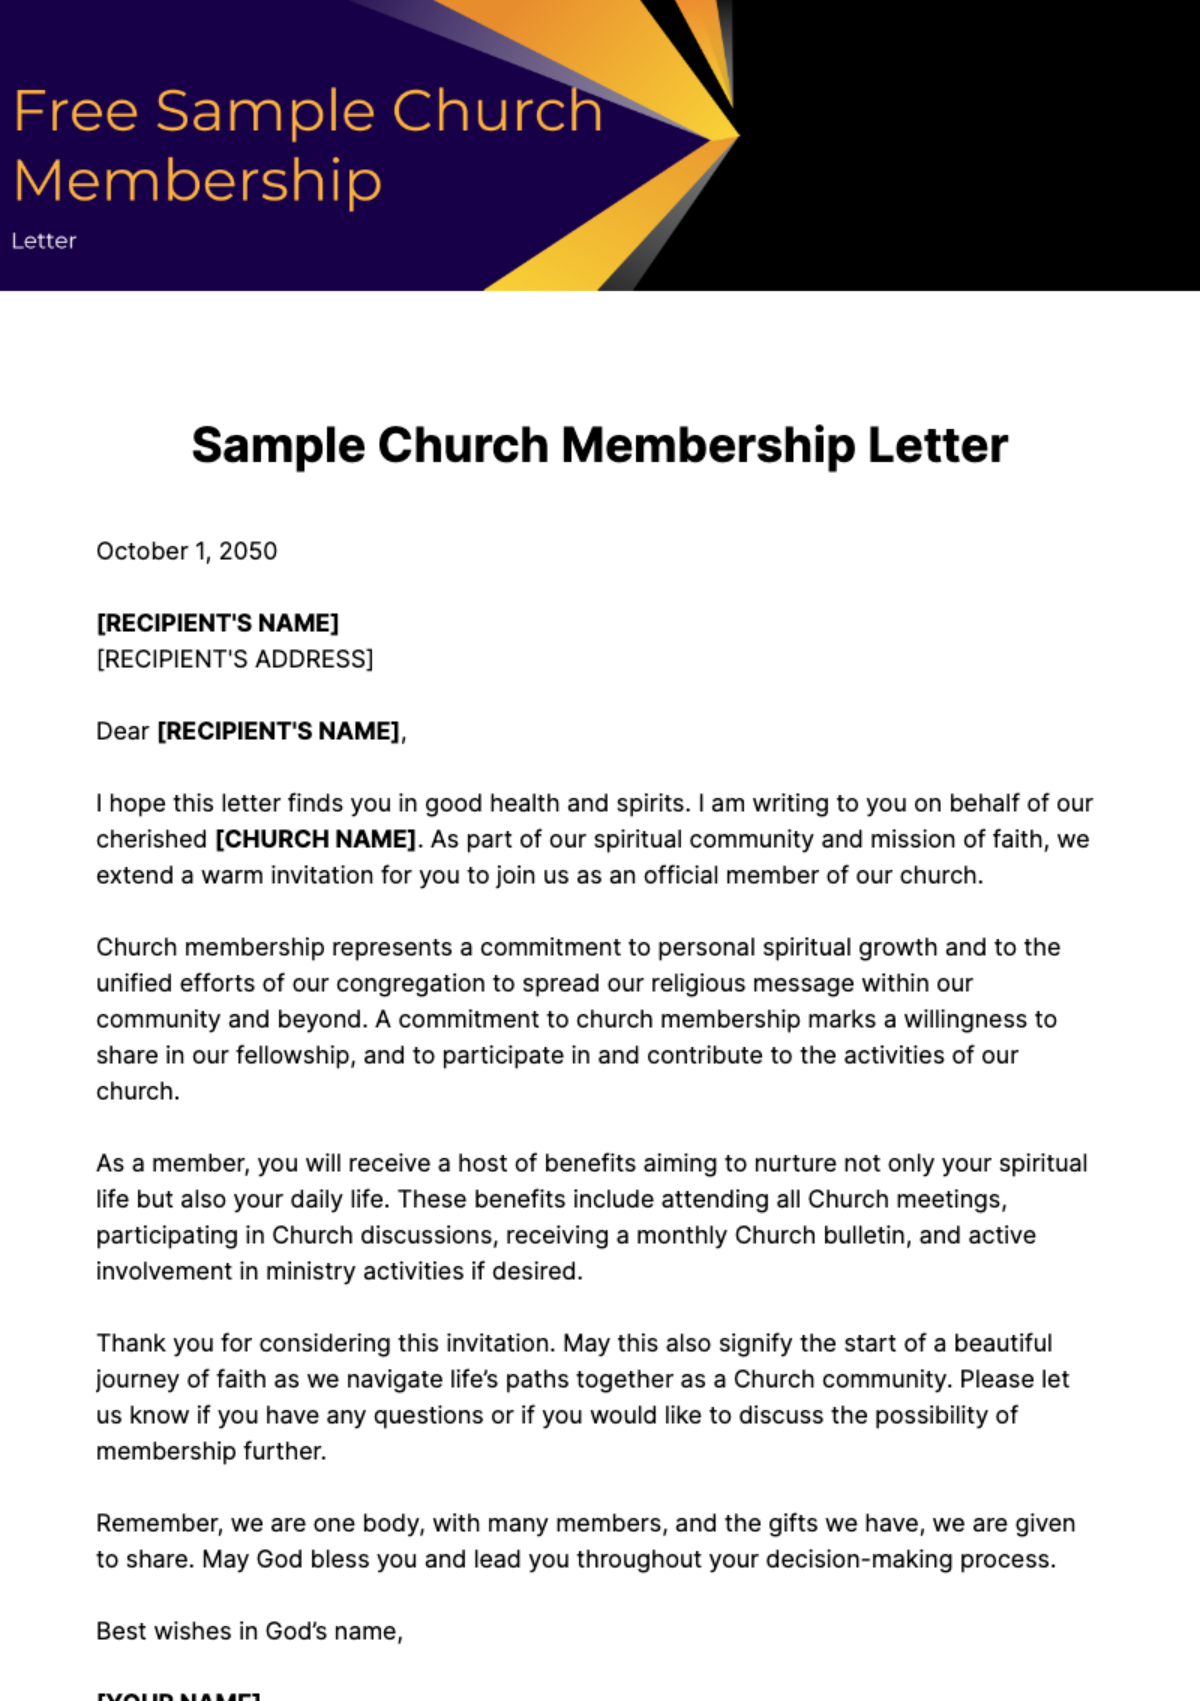 Free Sample Church Membership Letter Template